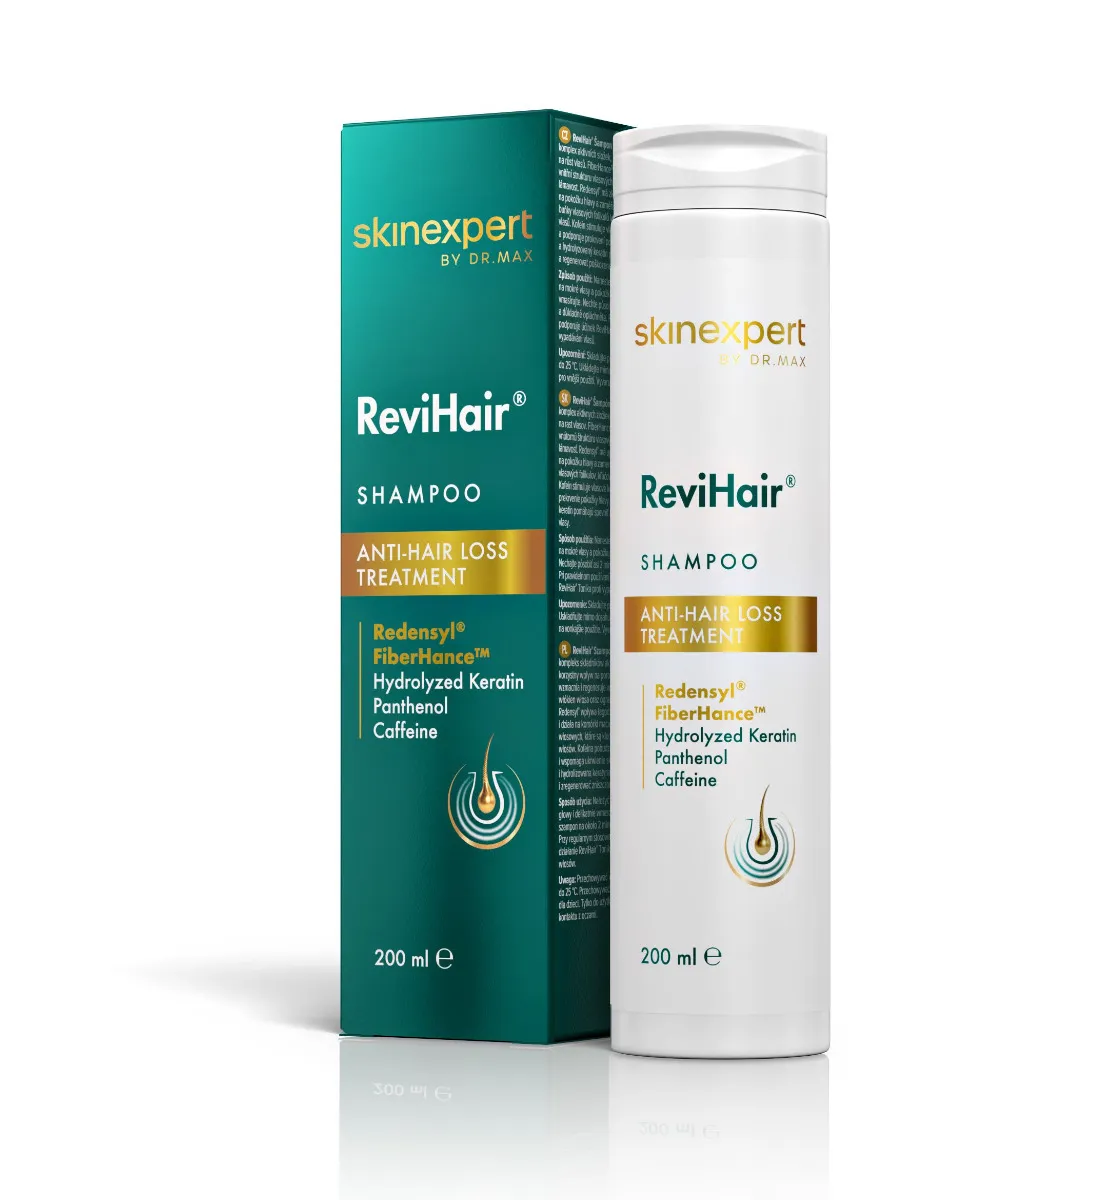 Skinexpert by Dr. Max ReviHair shampoo 200 ml